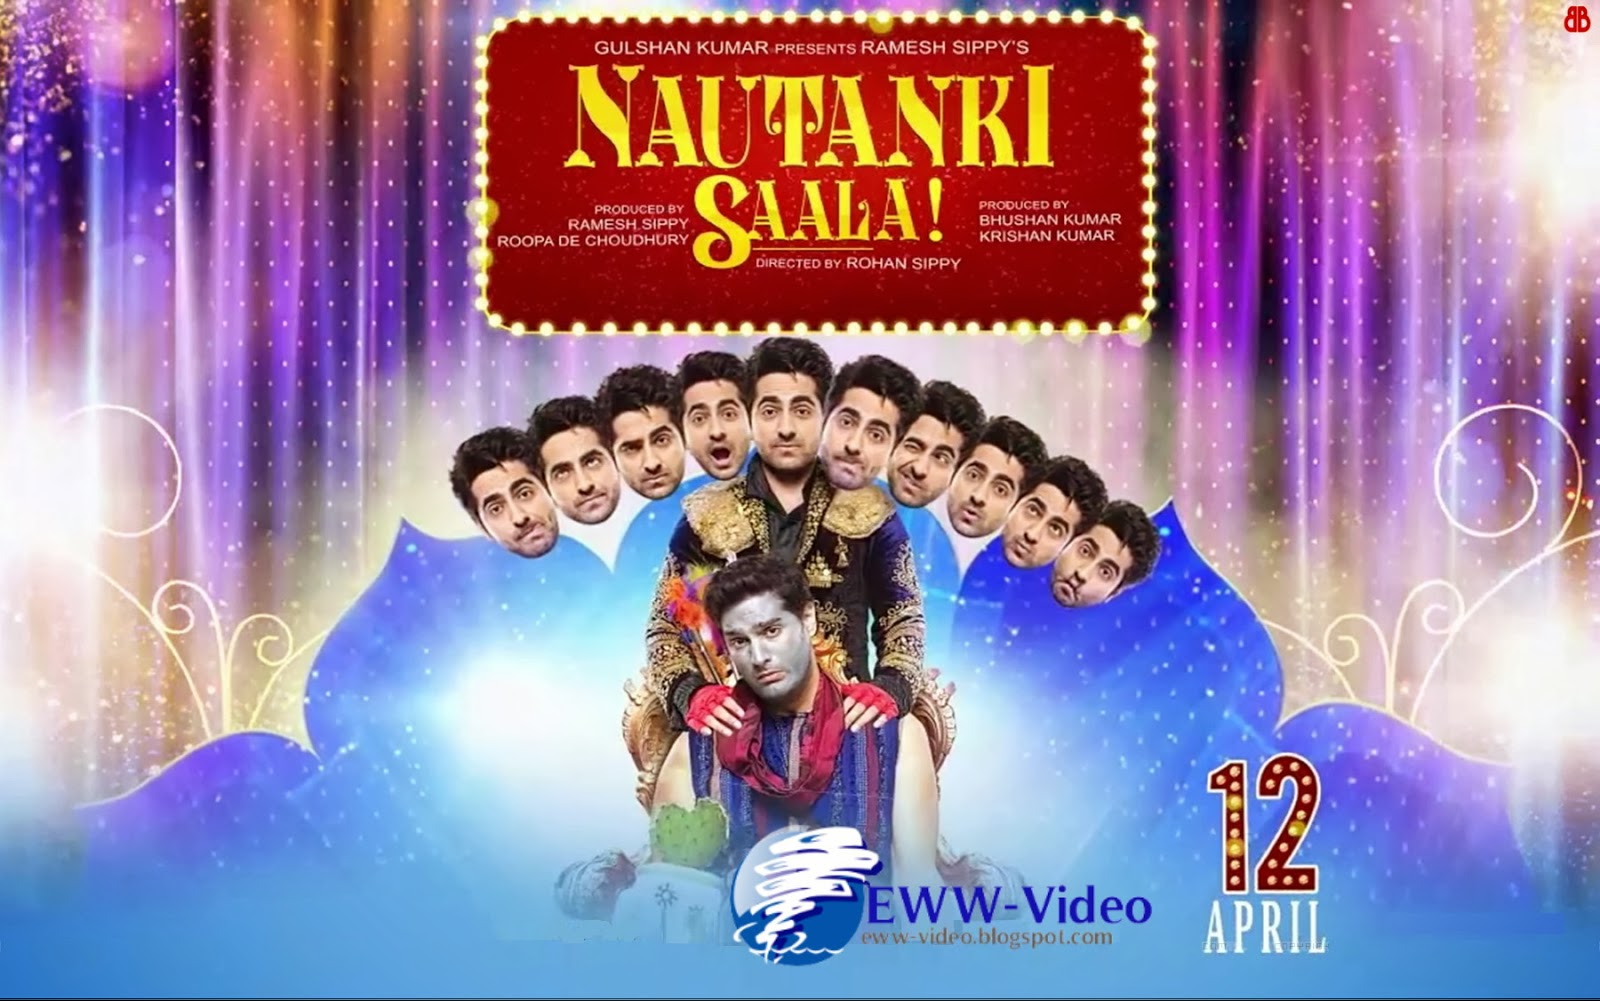 Nautanki Saala! Man Full Movie Dubbed In Hindi Free Download